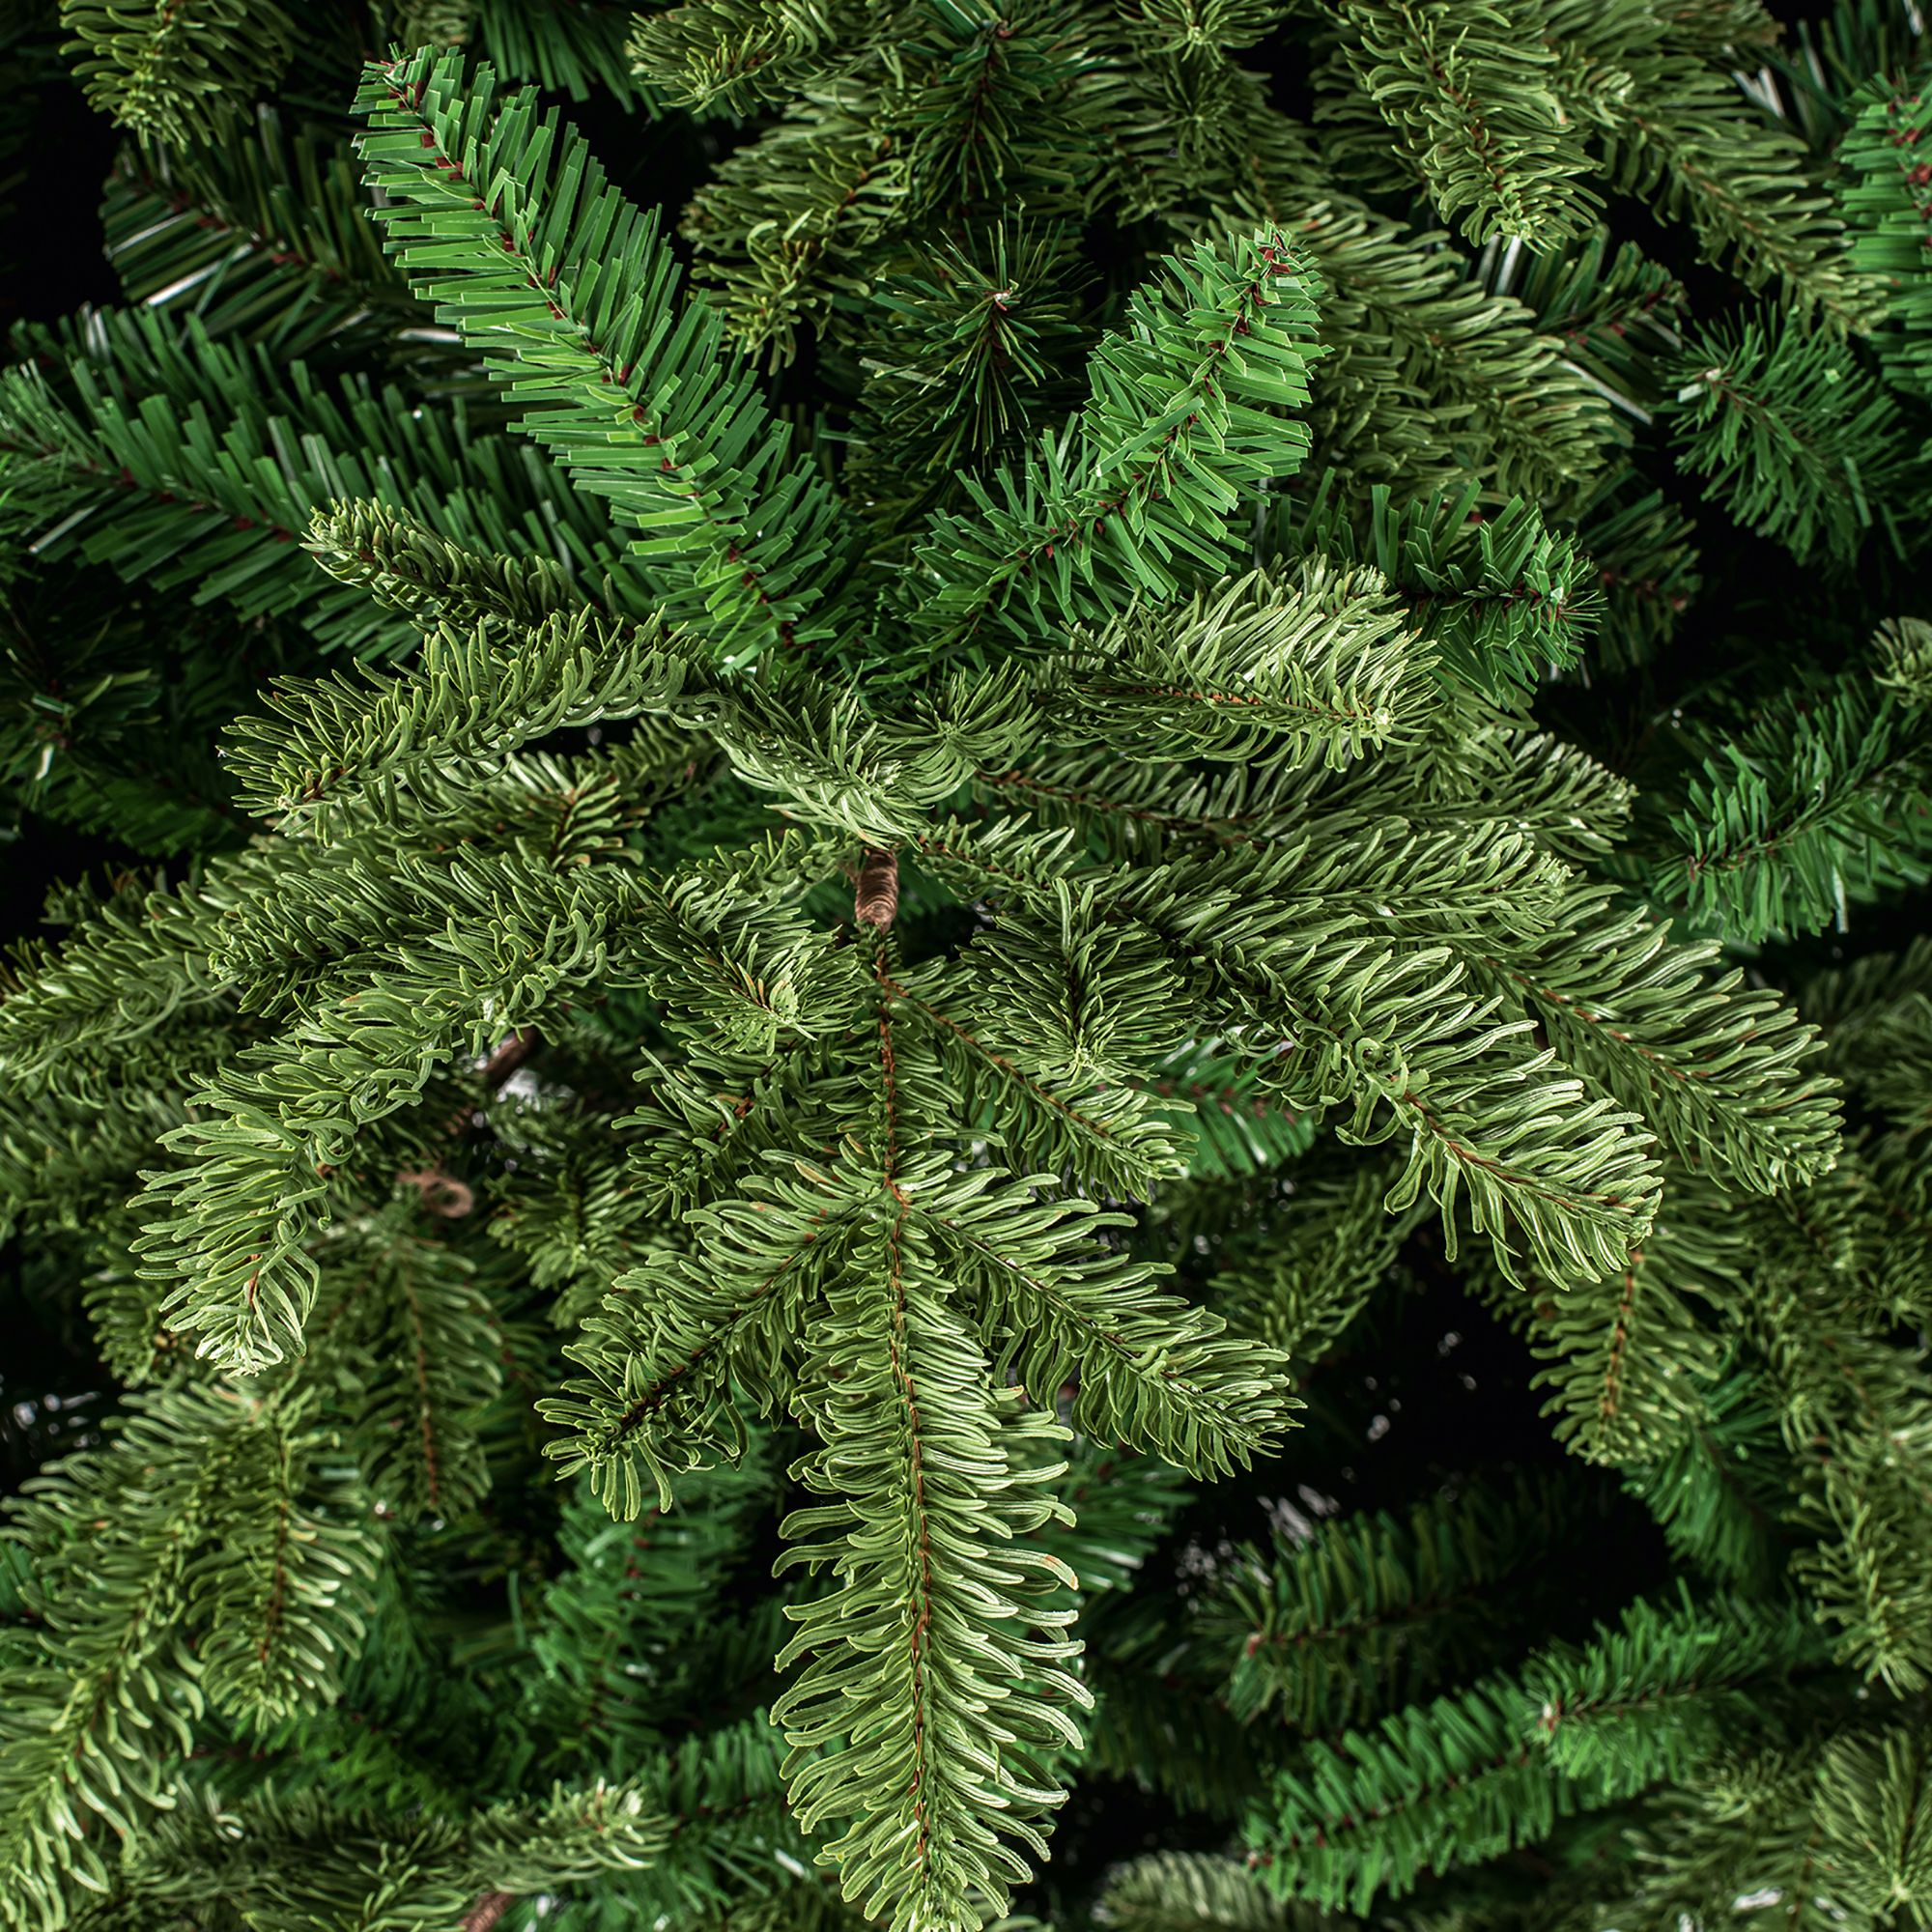 7ft Nordman fir Green Hinged Full Artificial Christmas tree